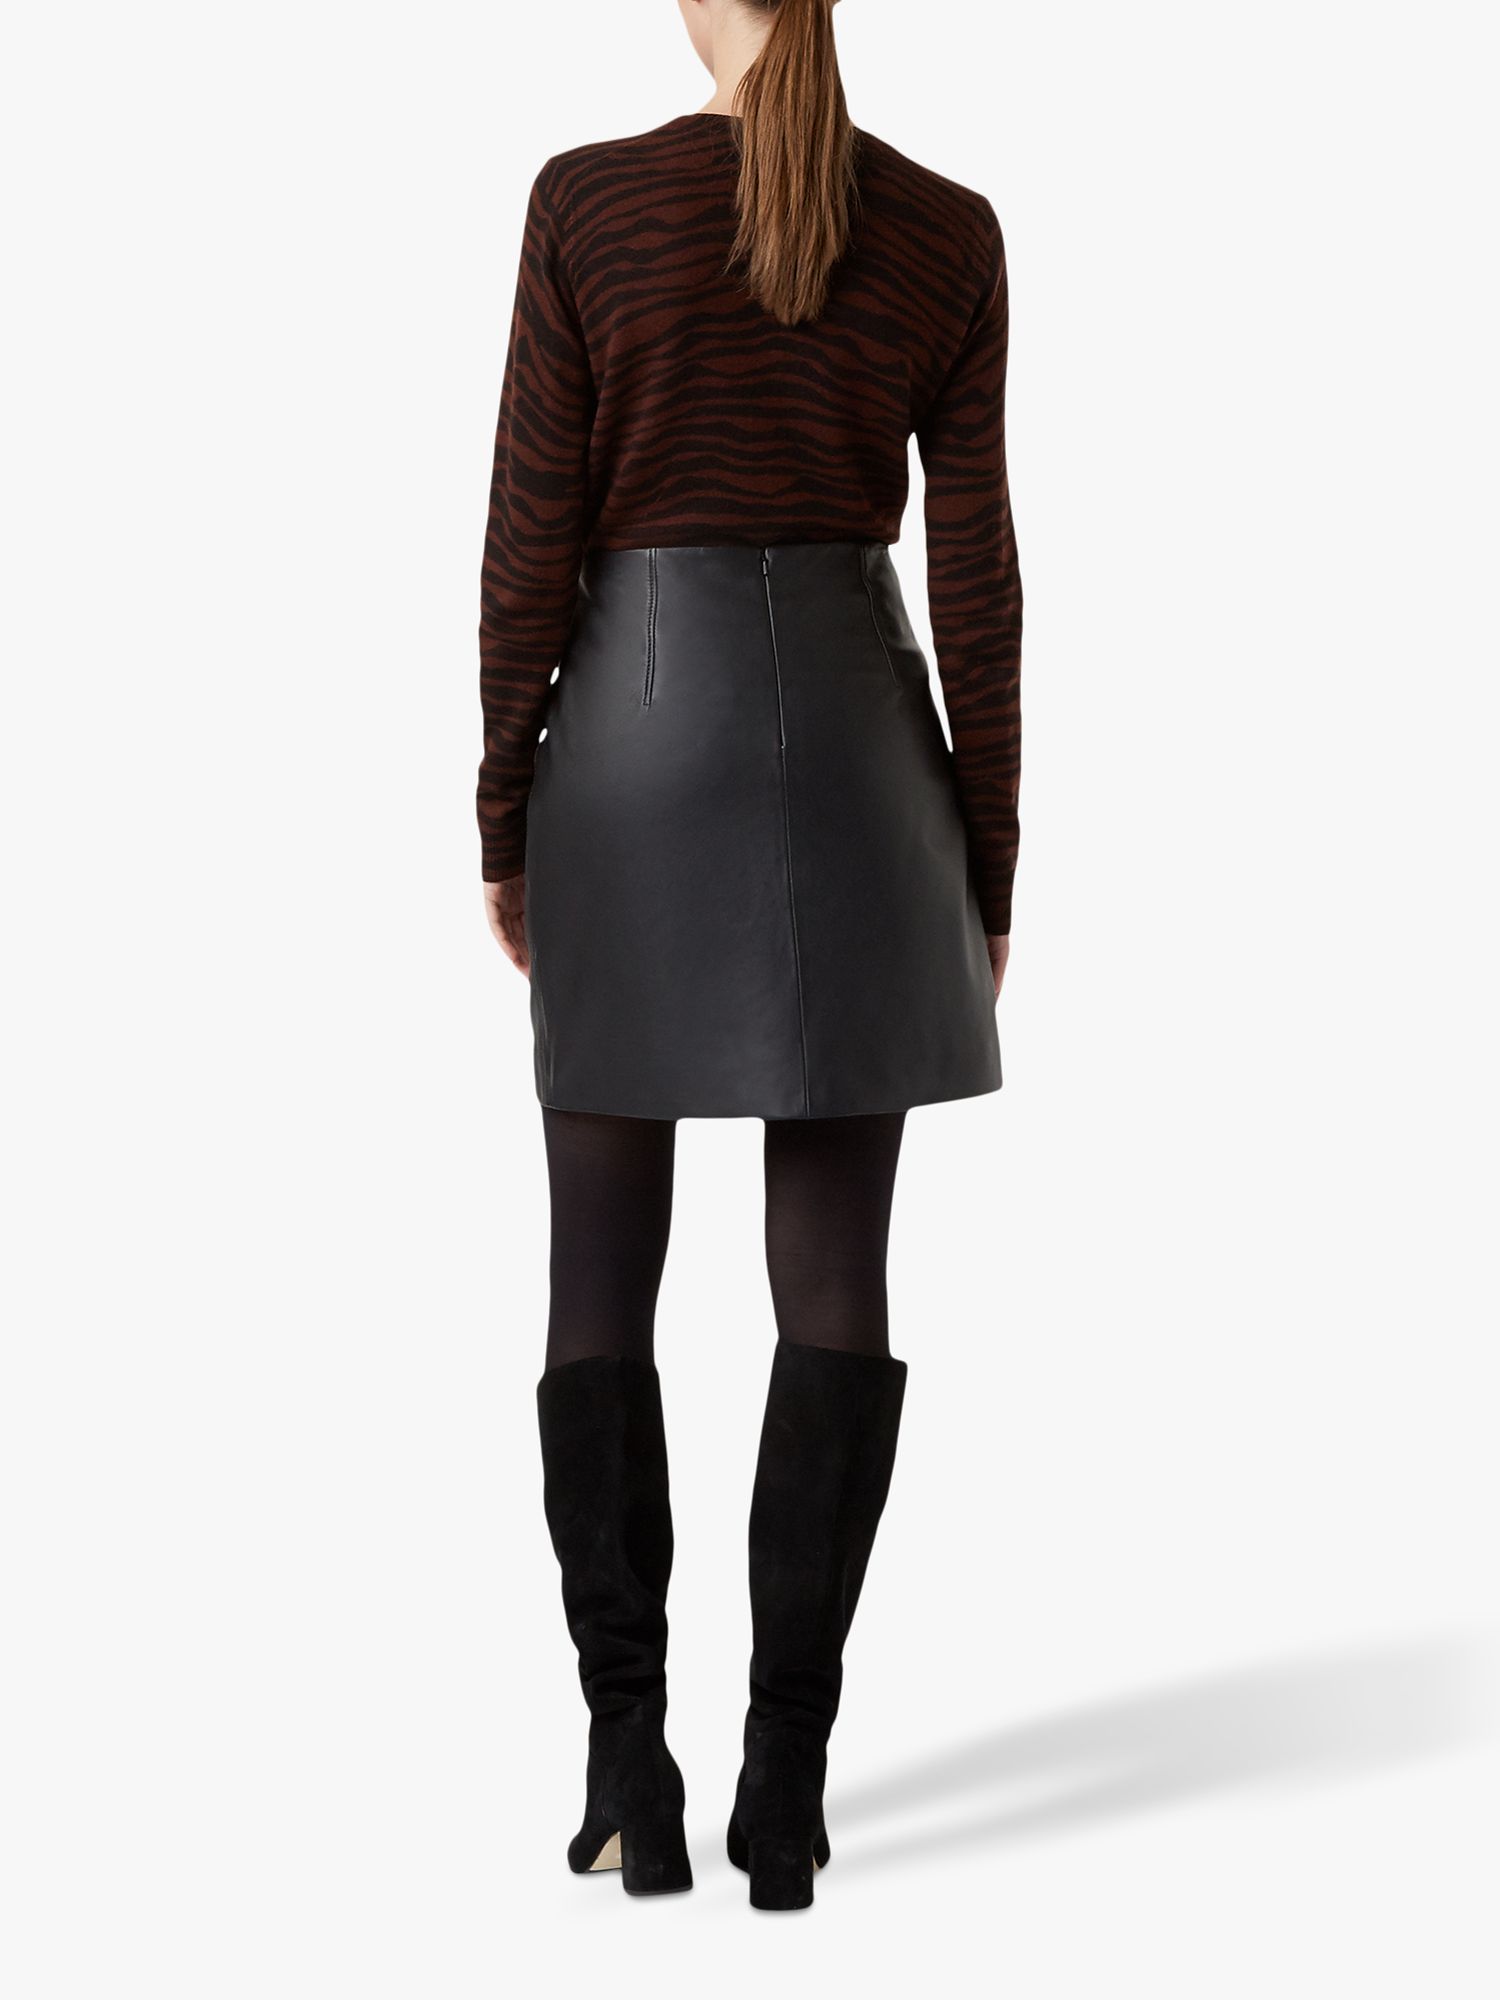 Hobbs Jenny Leather Skirt, Black at John Lewis & Partners